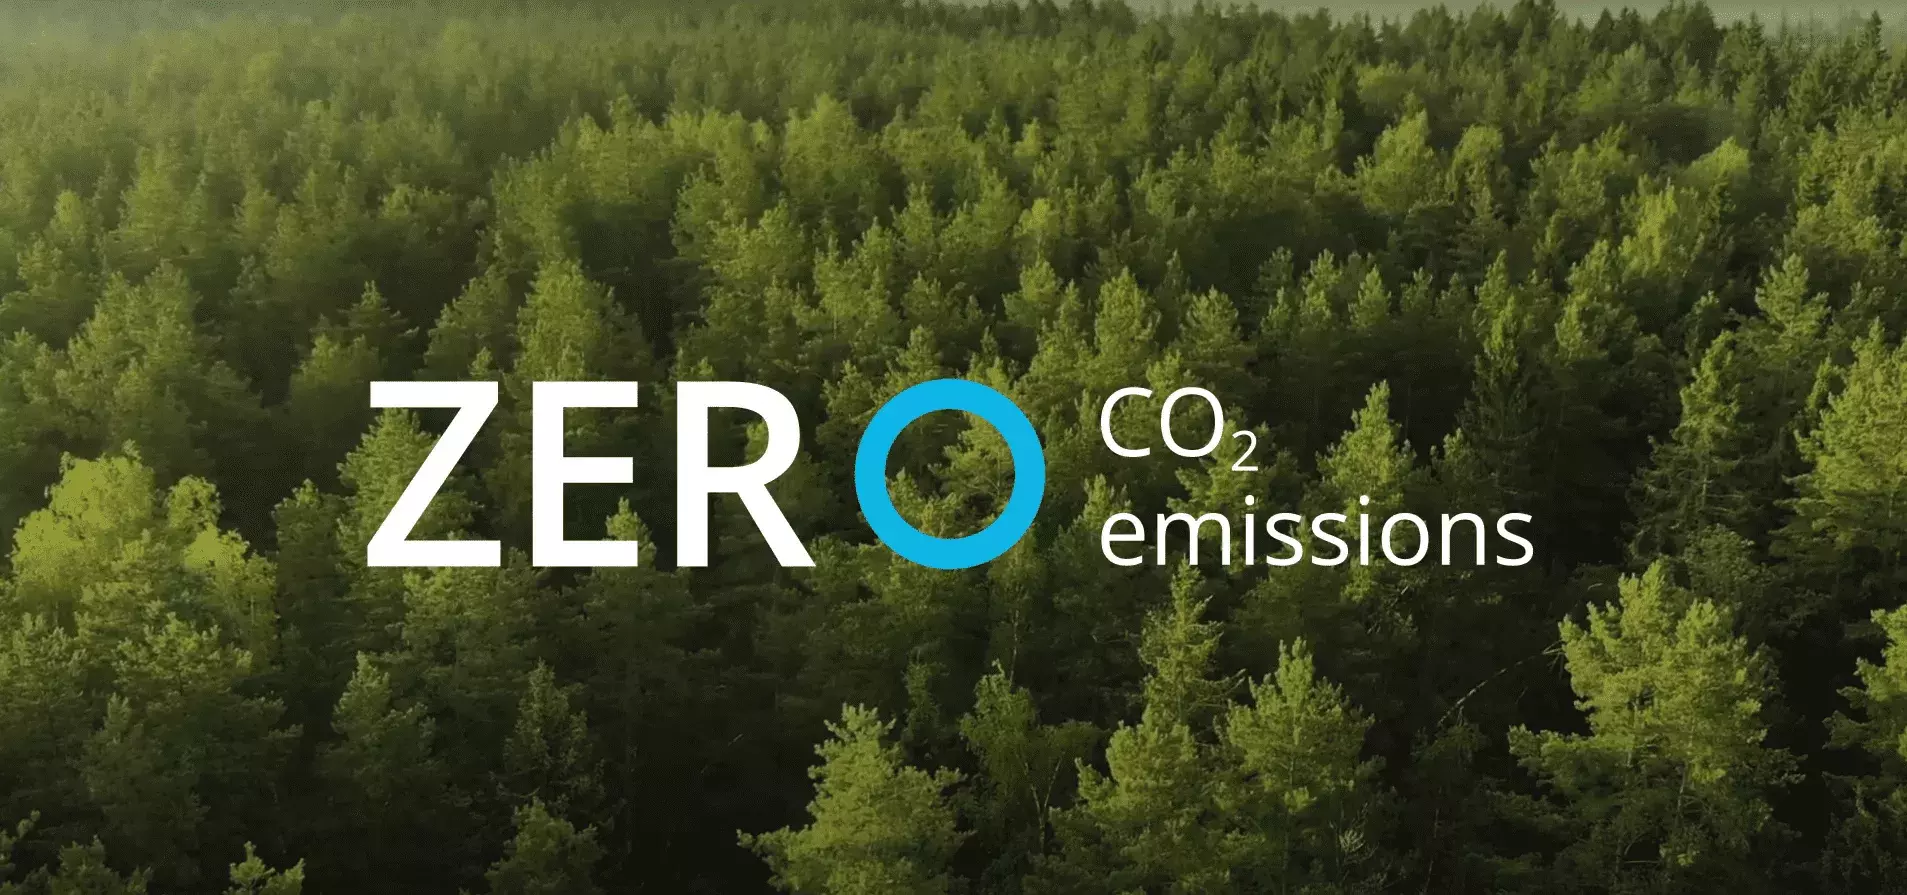 FORVIA zero CO2 emissions strategy